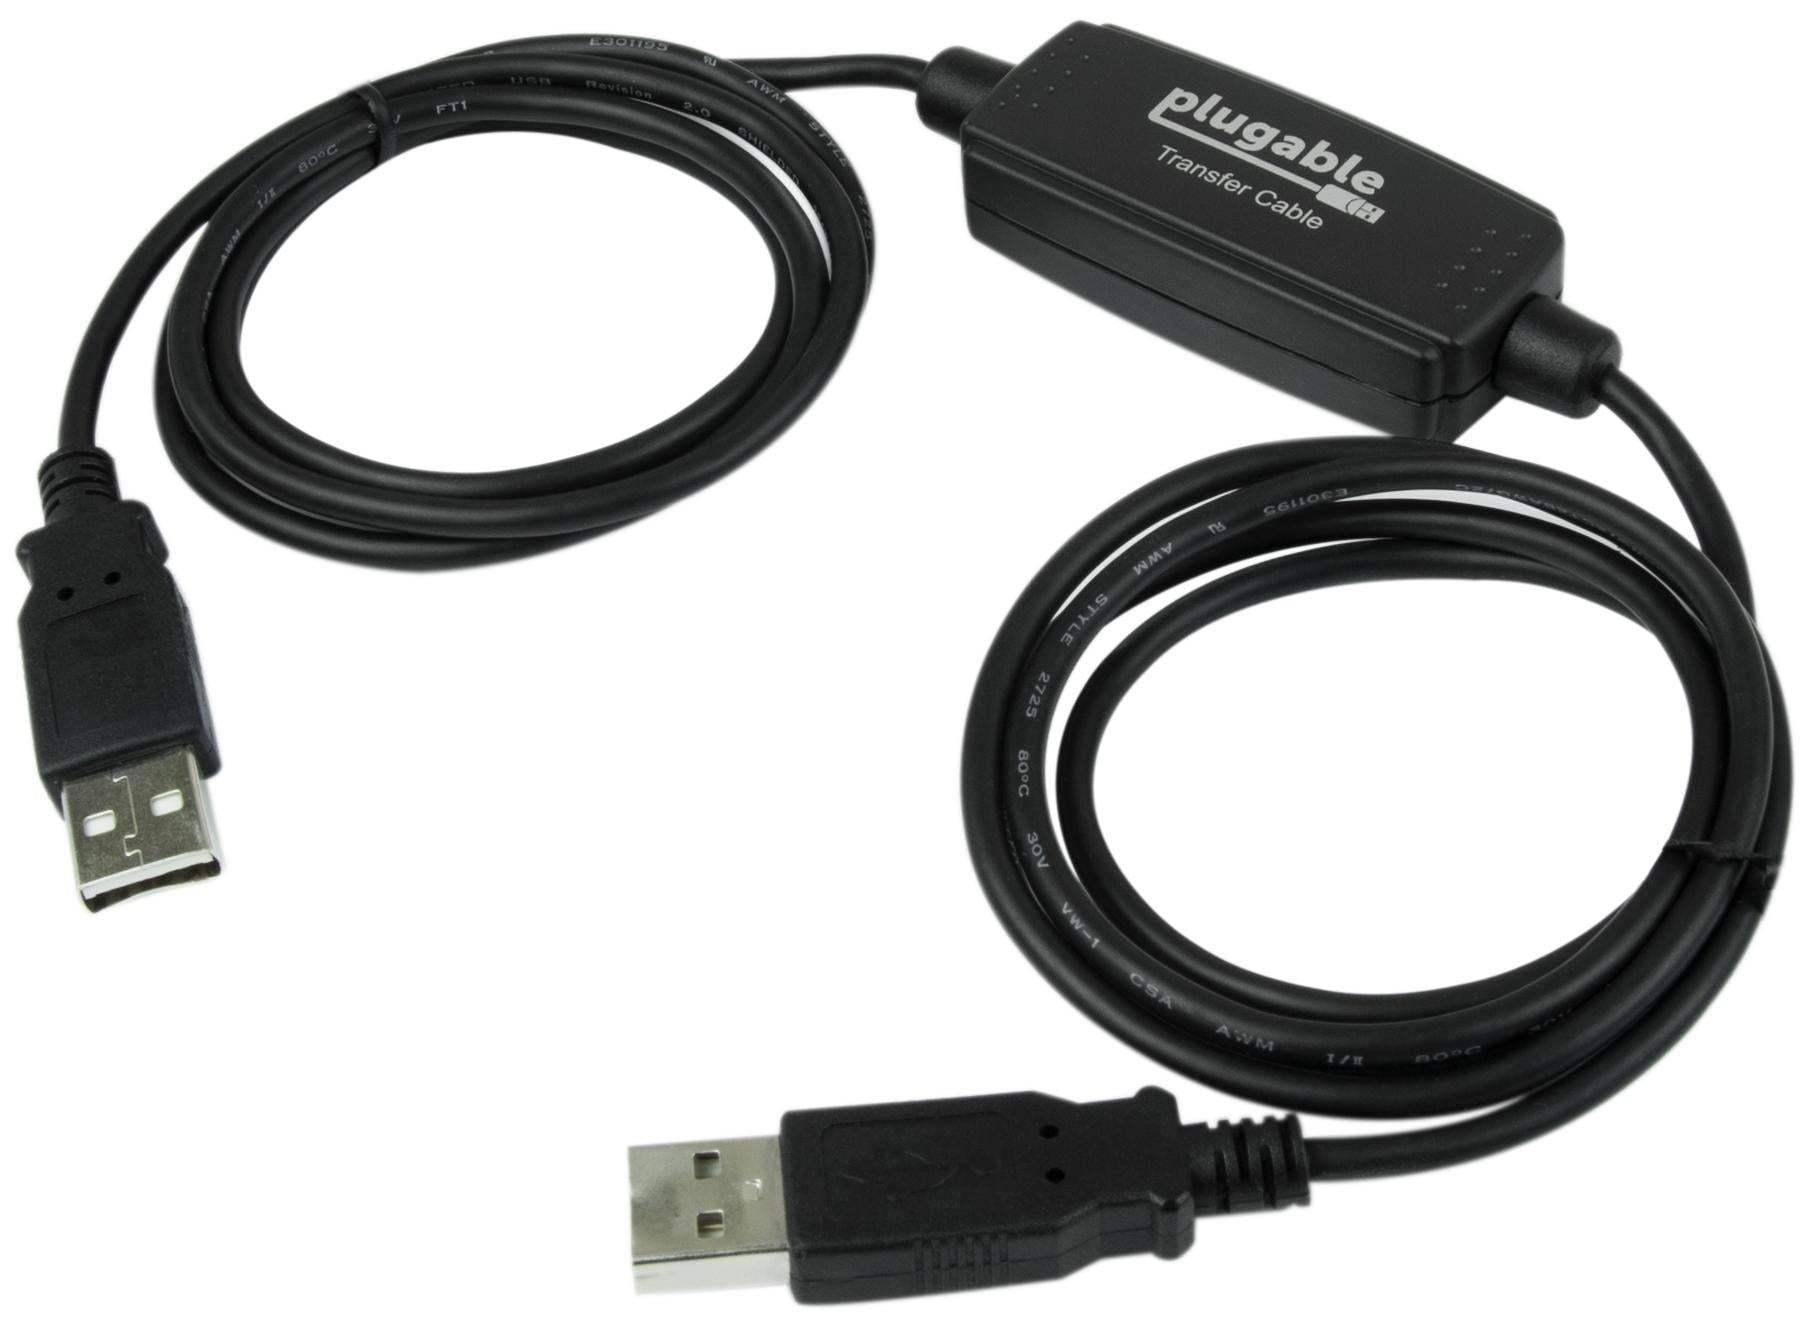 Plugable USB 2.0 Windows Transfer Cable – Plugable Technologies